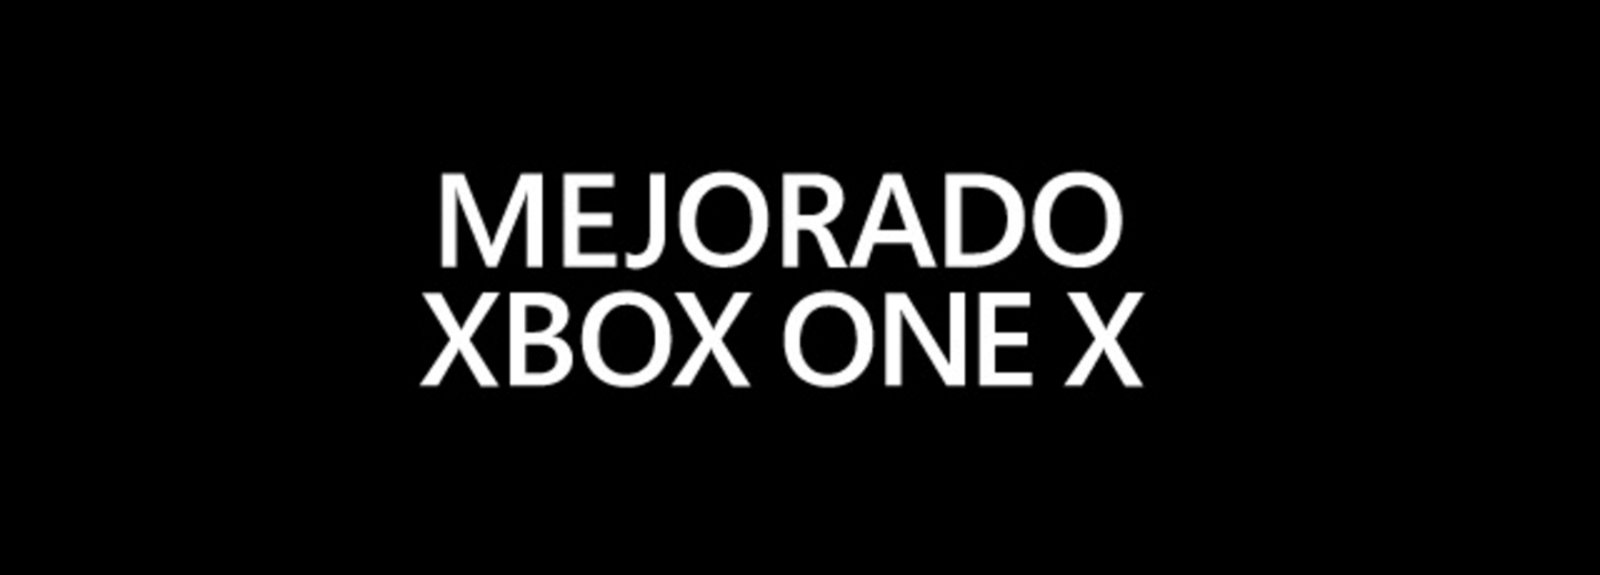 Logotipo Mejorado Xbox One X